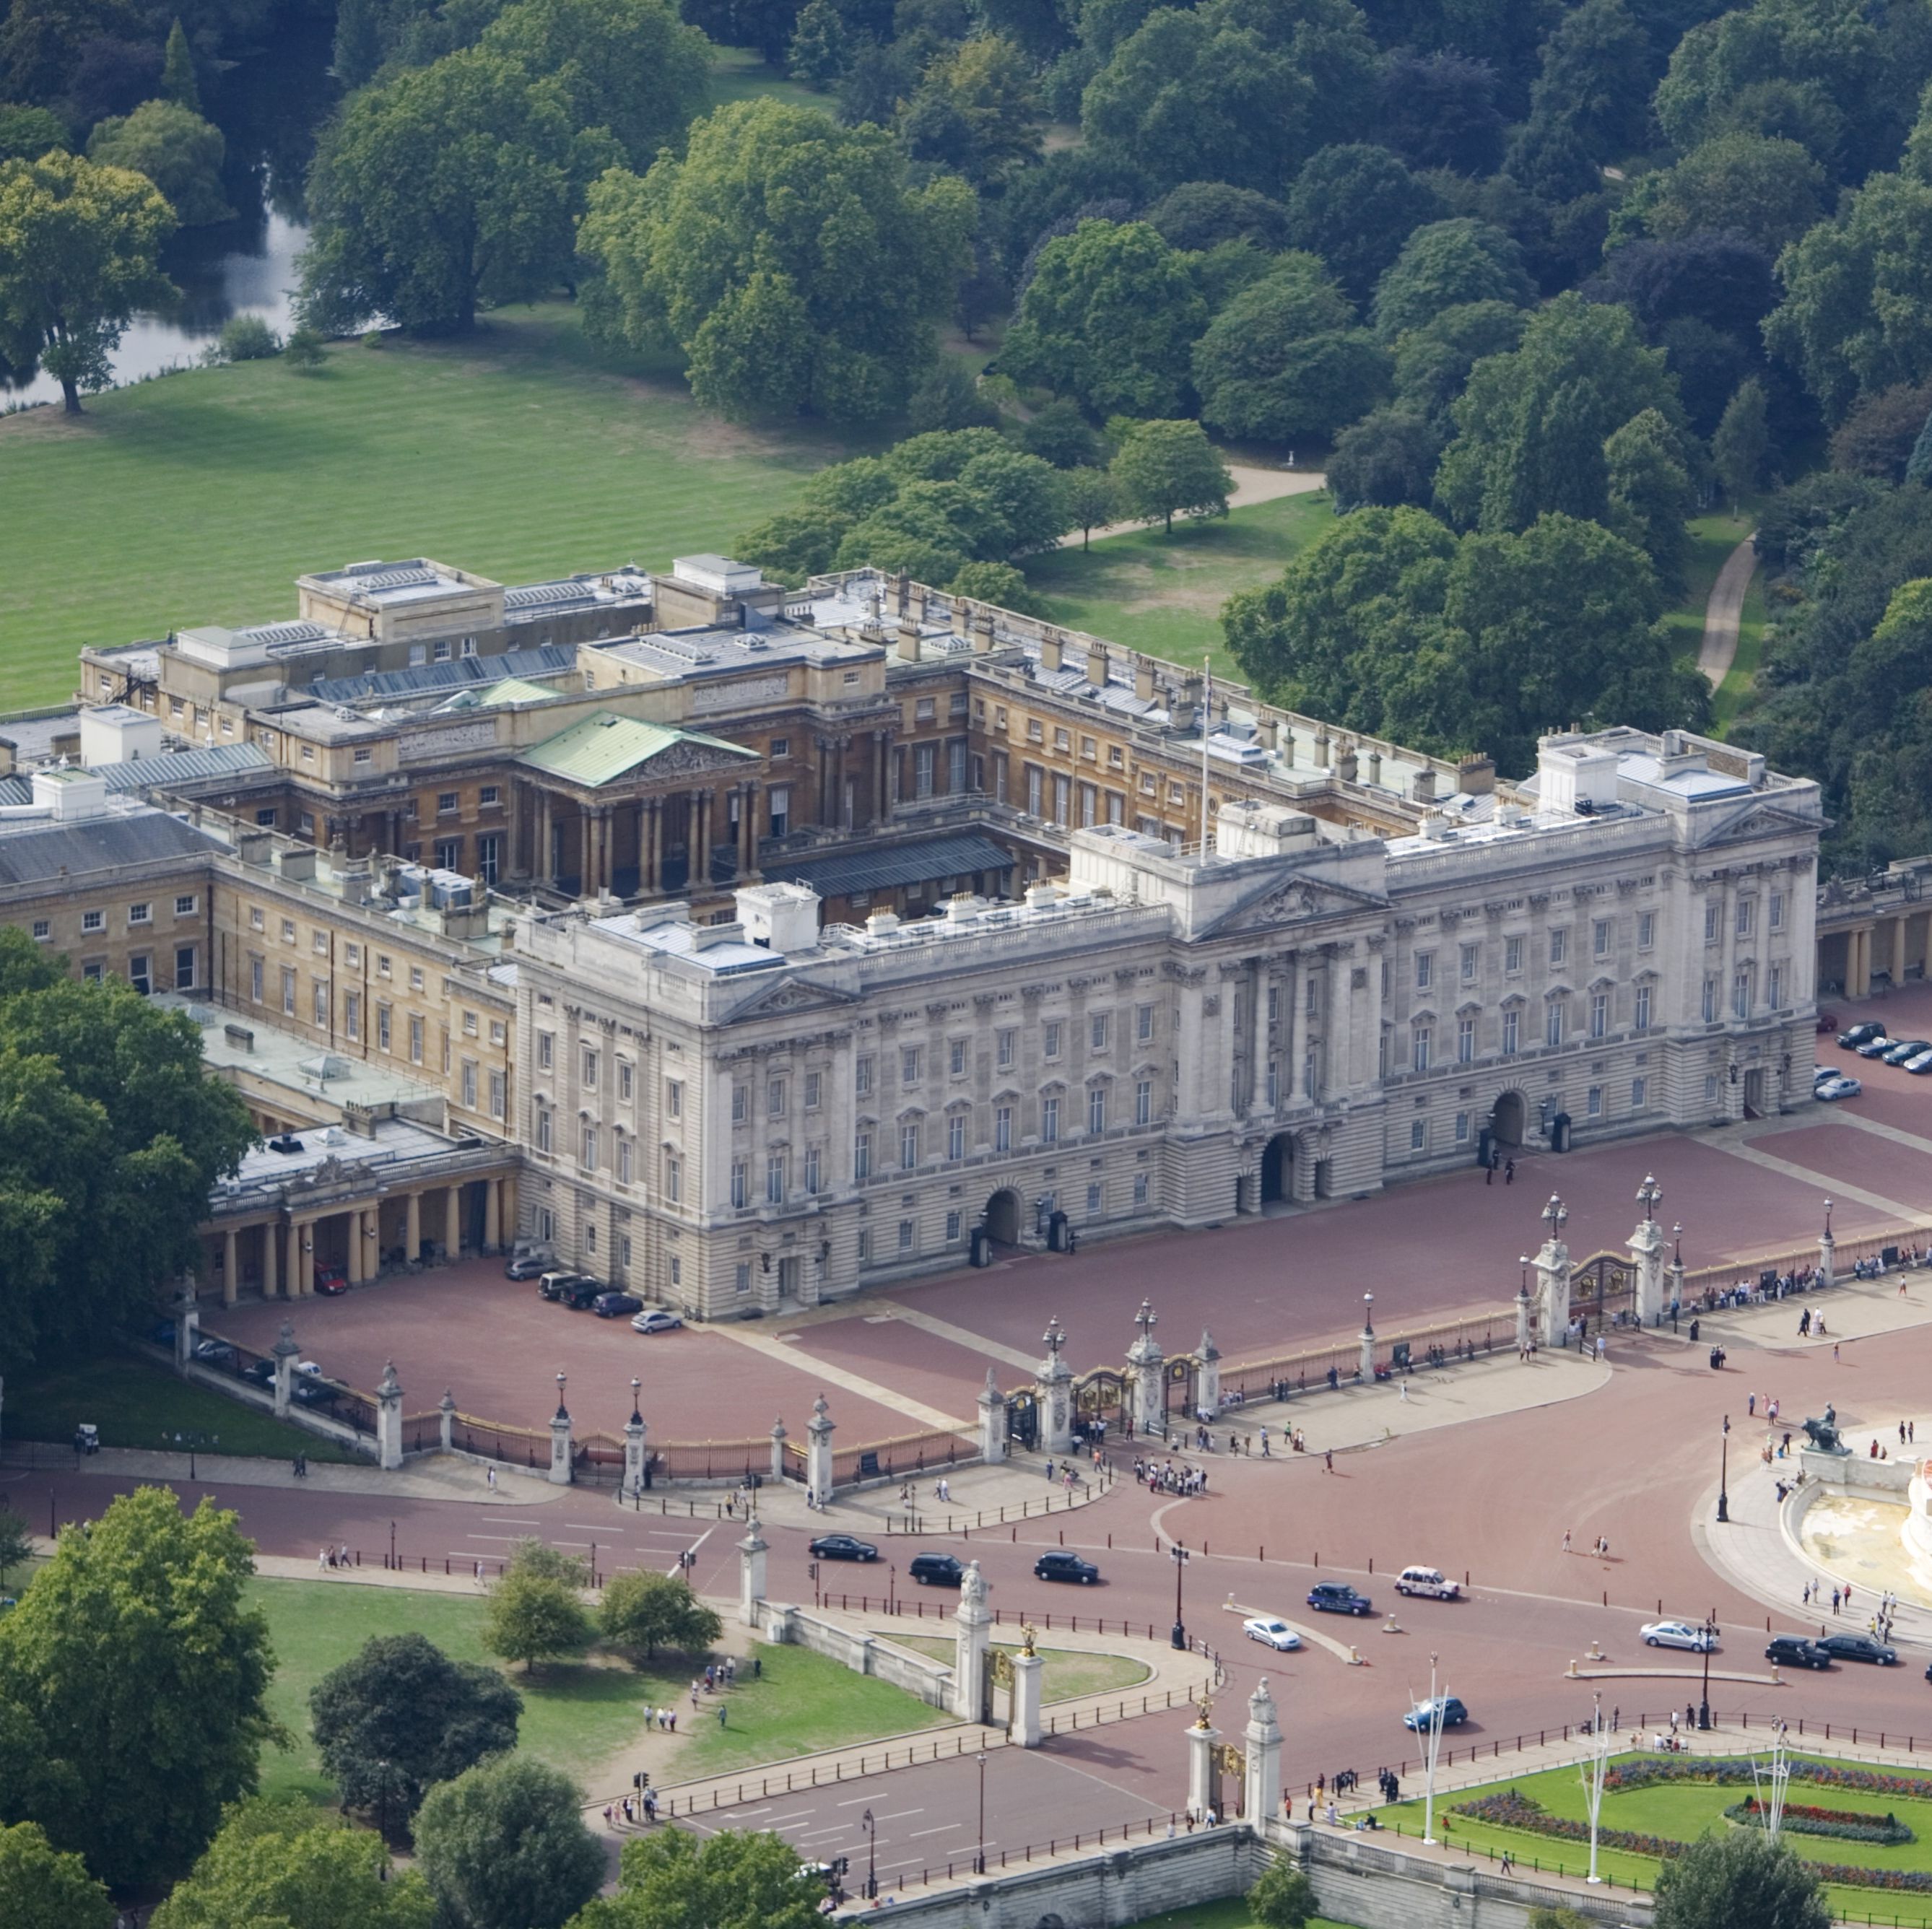 Buckingham Palace Has a Secret Swimming Pool